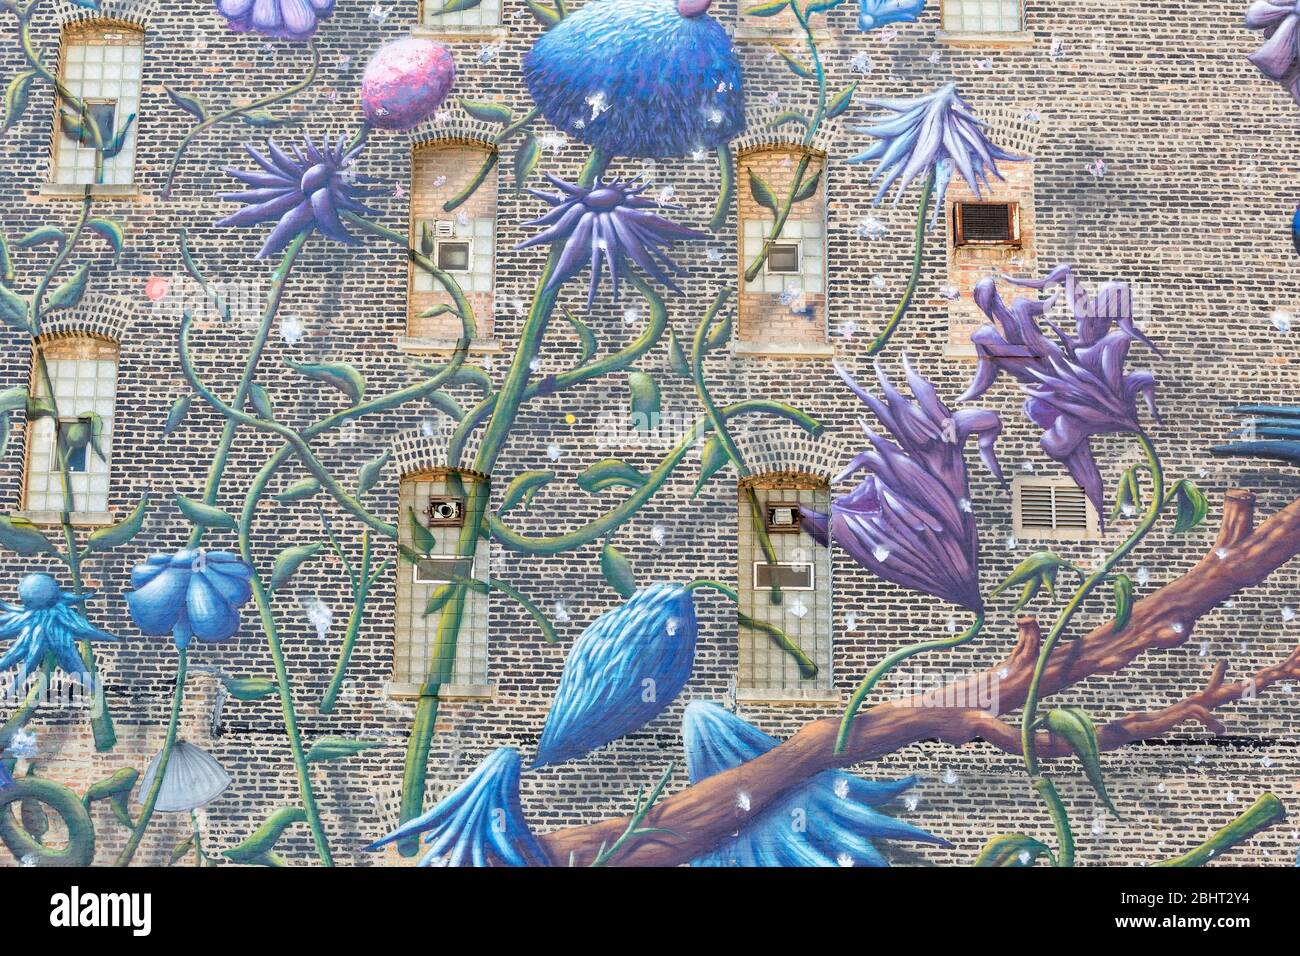 From Bloom to Doom mural by dutch artist Collin van der Sluijs, 1006 S Michigan Avenue, Chicago, Illinois, USA Stock Photo